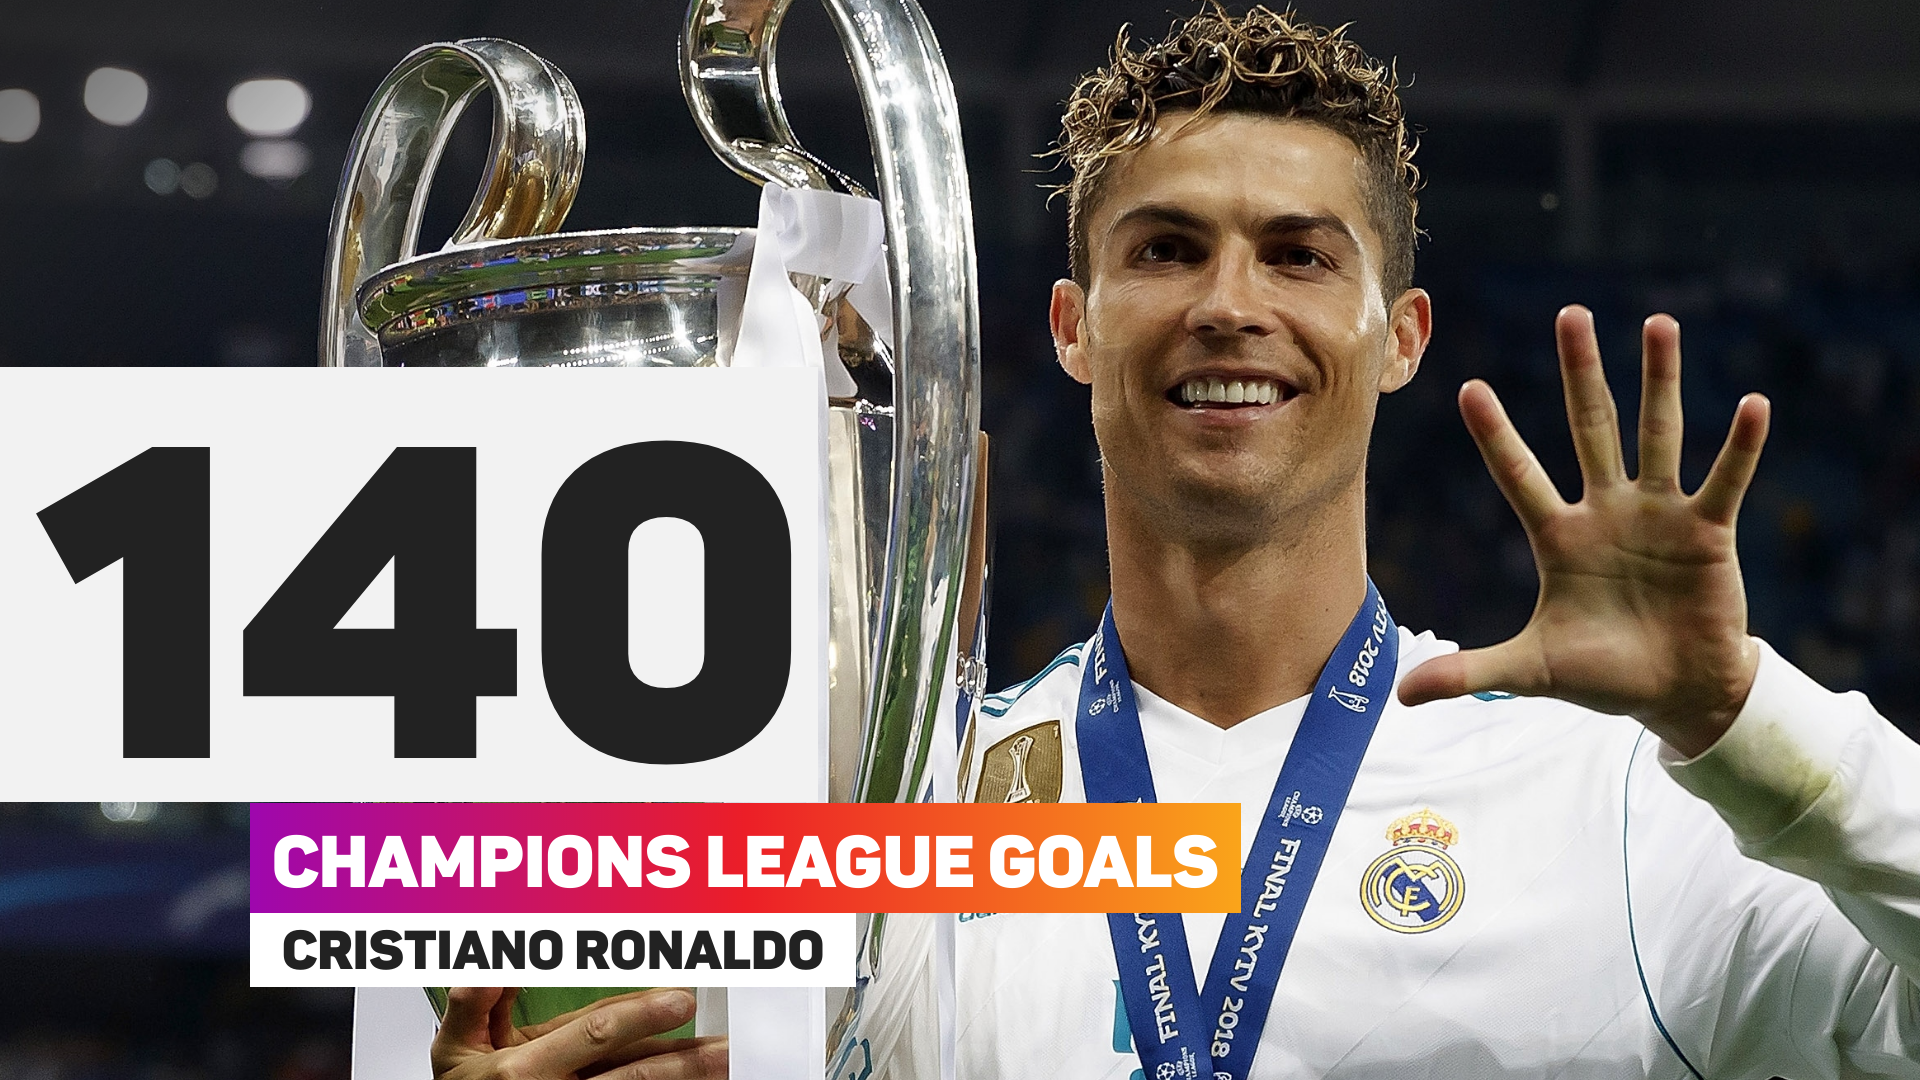 Cristiano Ronaldo has scored more Champions League goals than anyone else